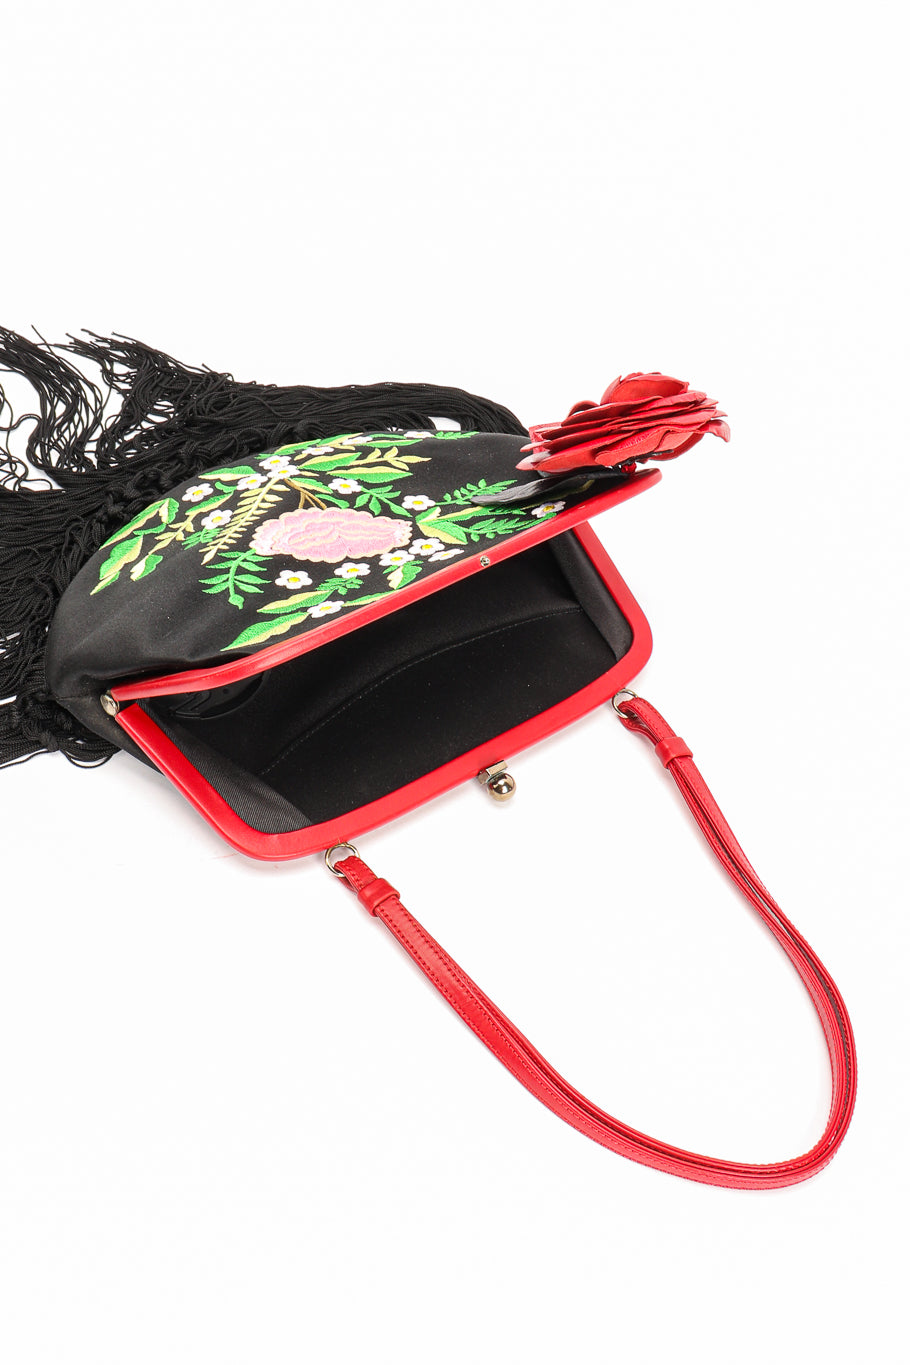 Fringe shoulder bag by Moschino on white background open @recessla